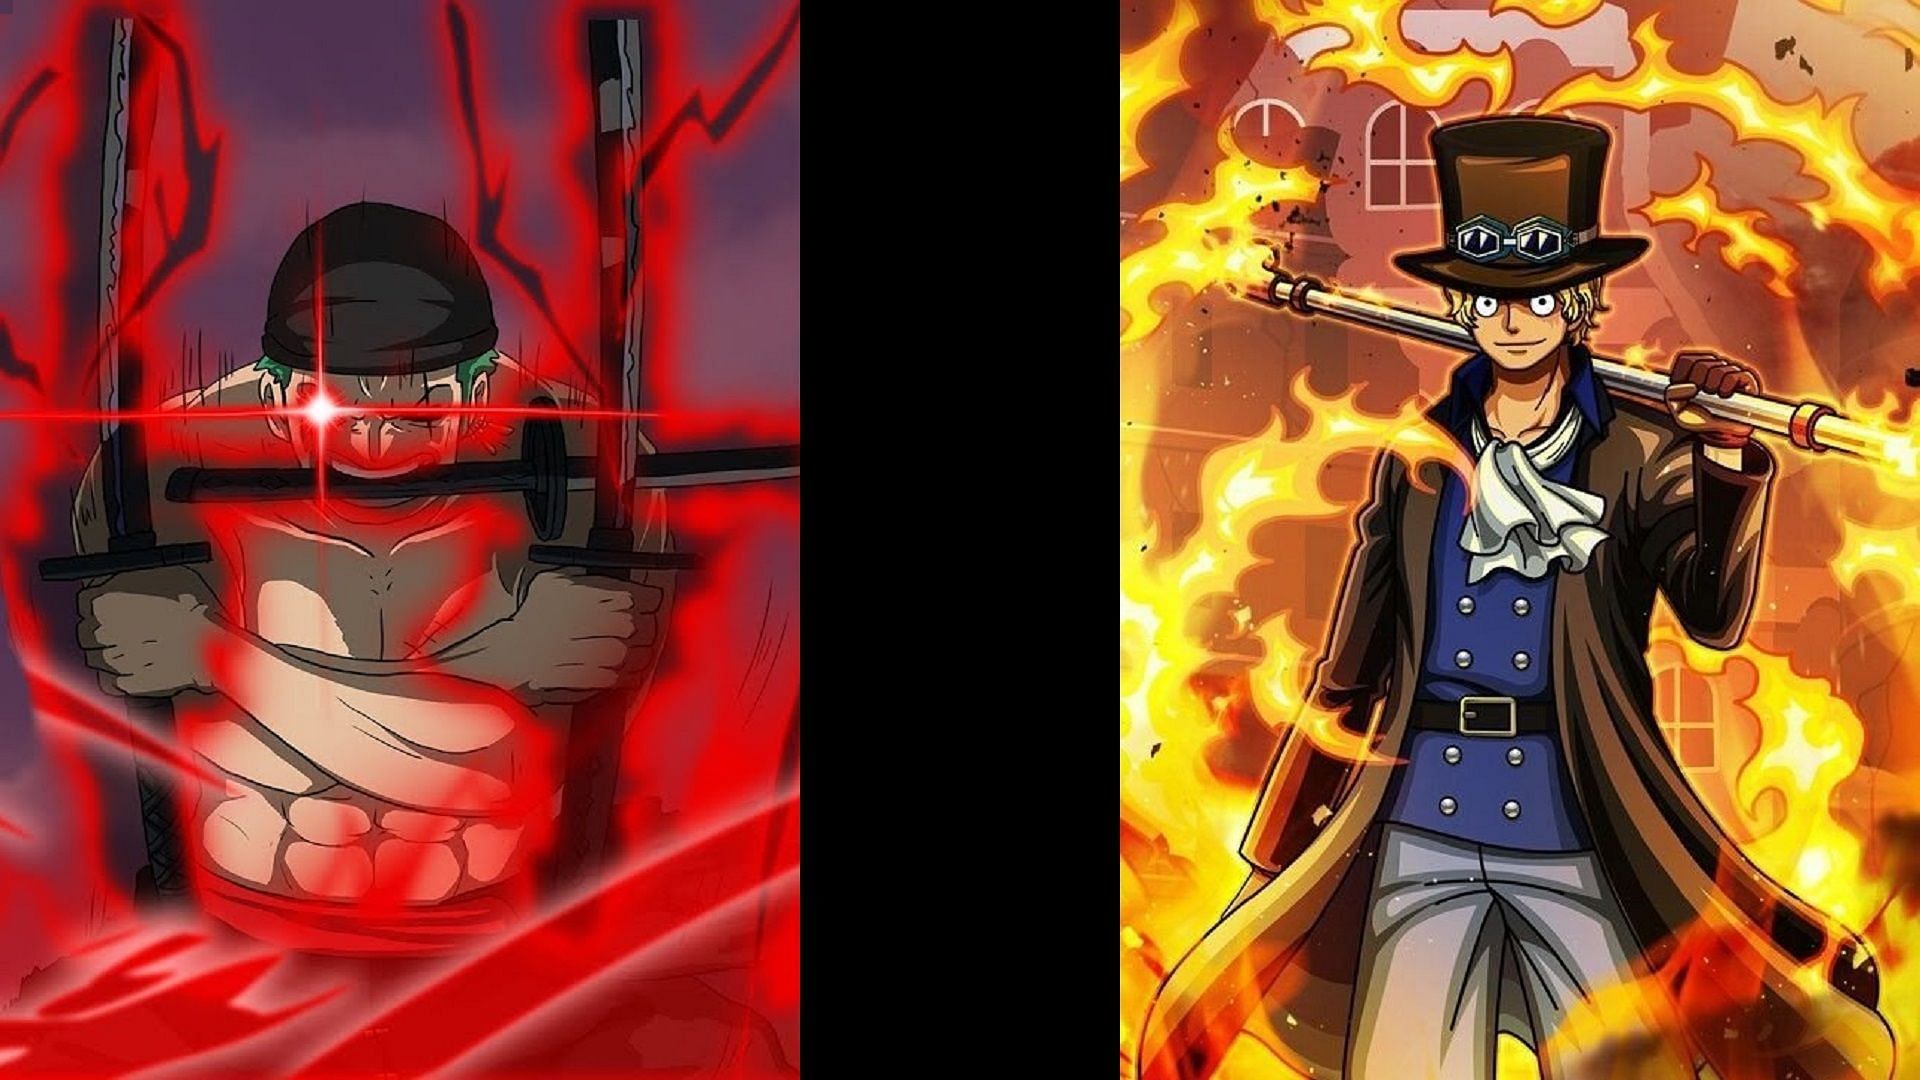 With his Foxfire Style and his superior Haki, Zoro is clearly advantaged over Sabo (Image via Eiichiro Oda/Shueisha, One Piece)